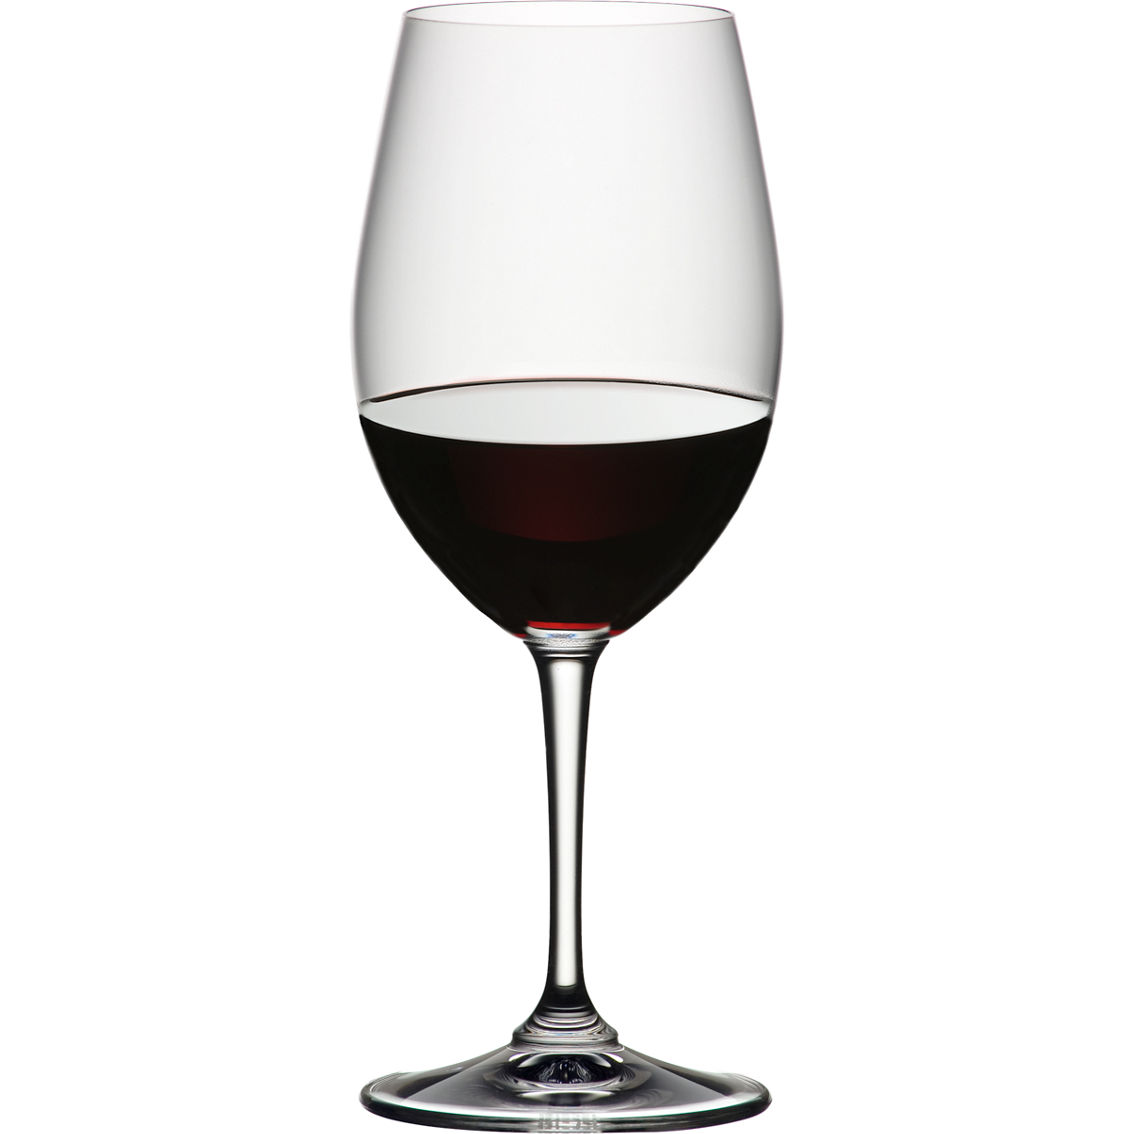 Riedel Bravissimo Wine Glasses Set 4 pc. - Image 5 of 5